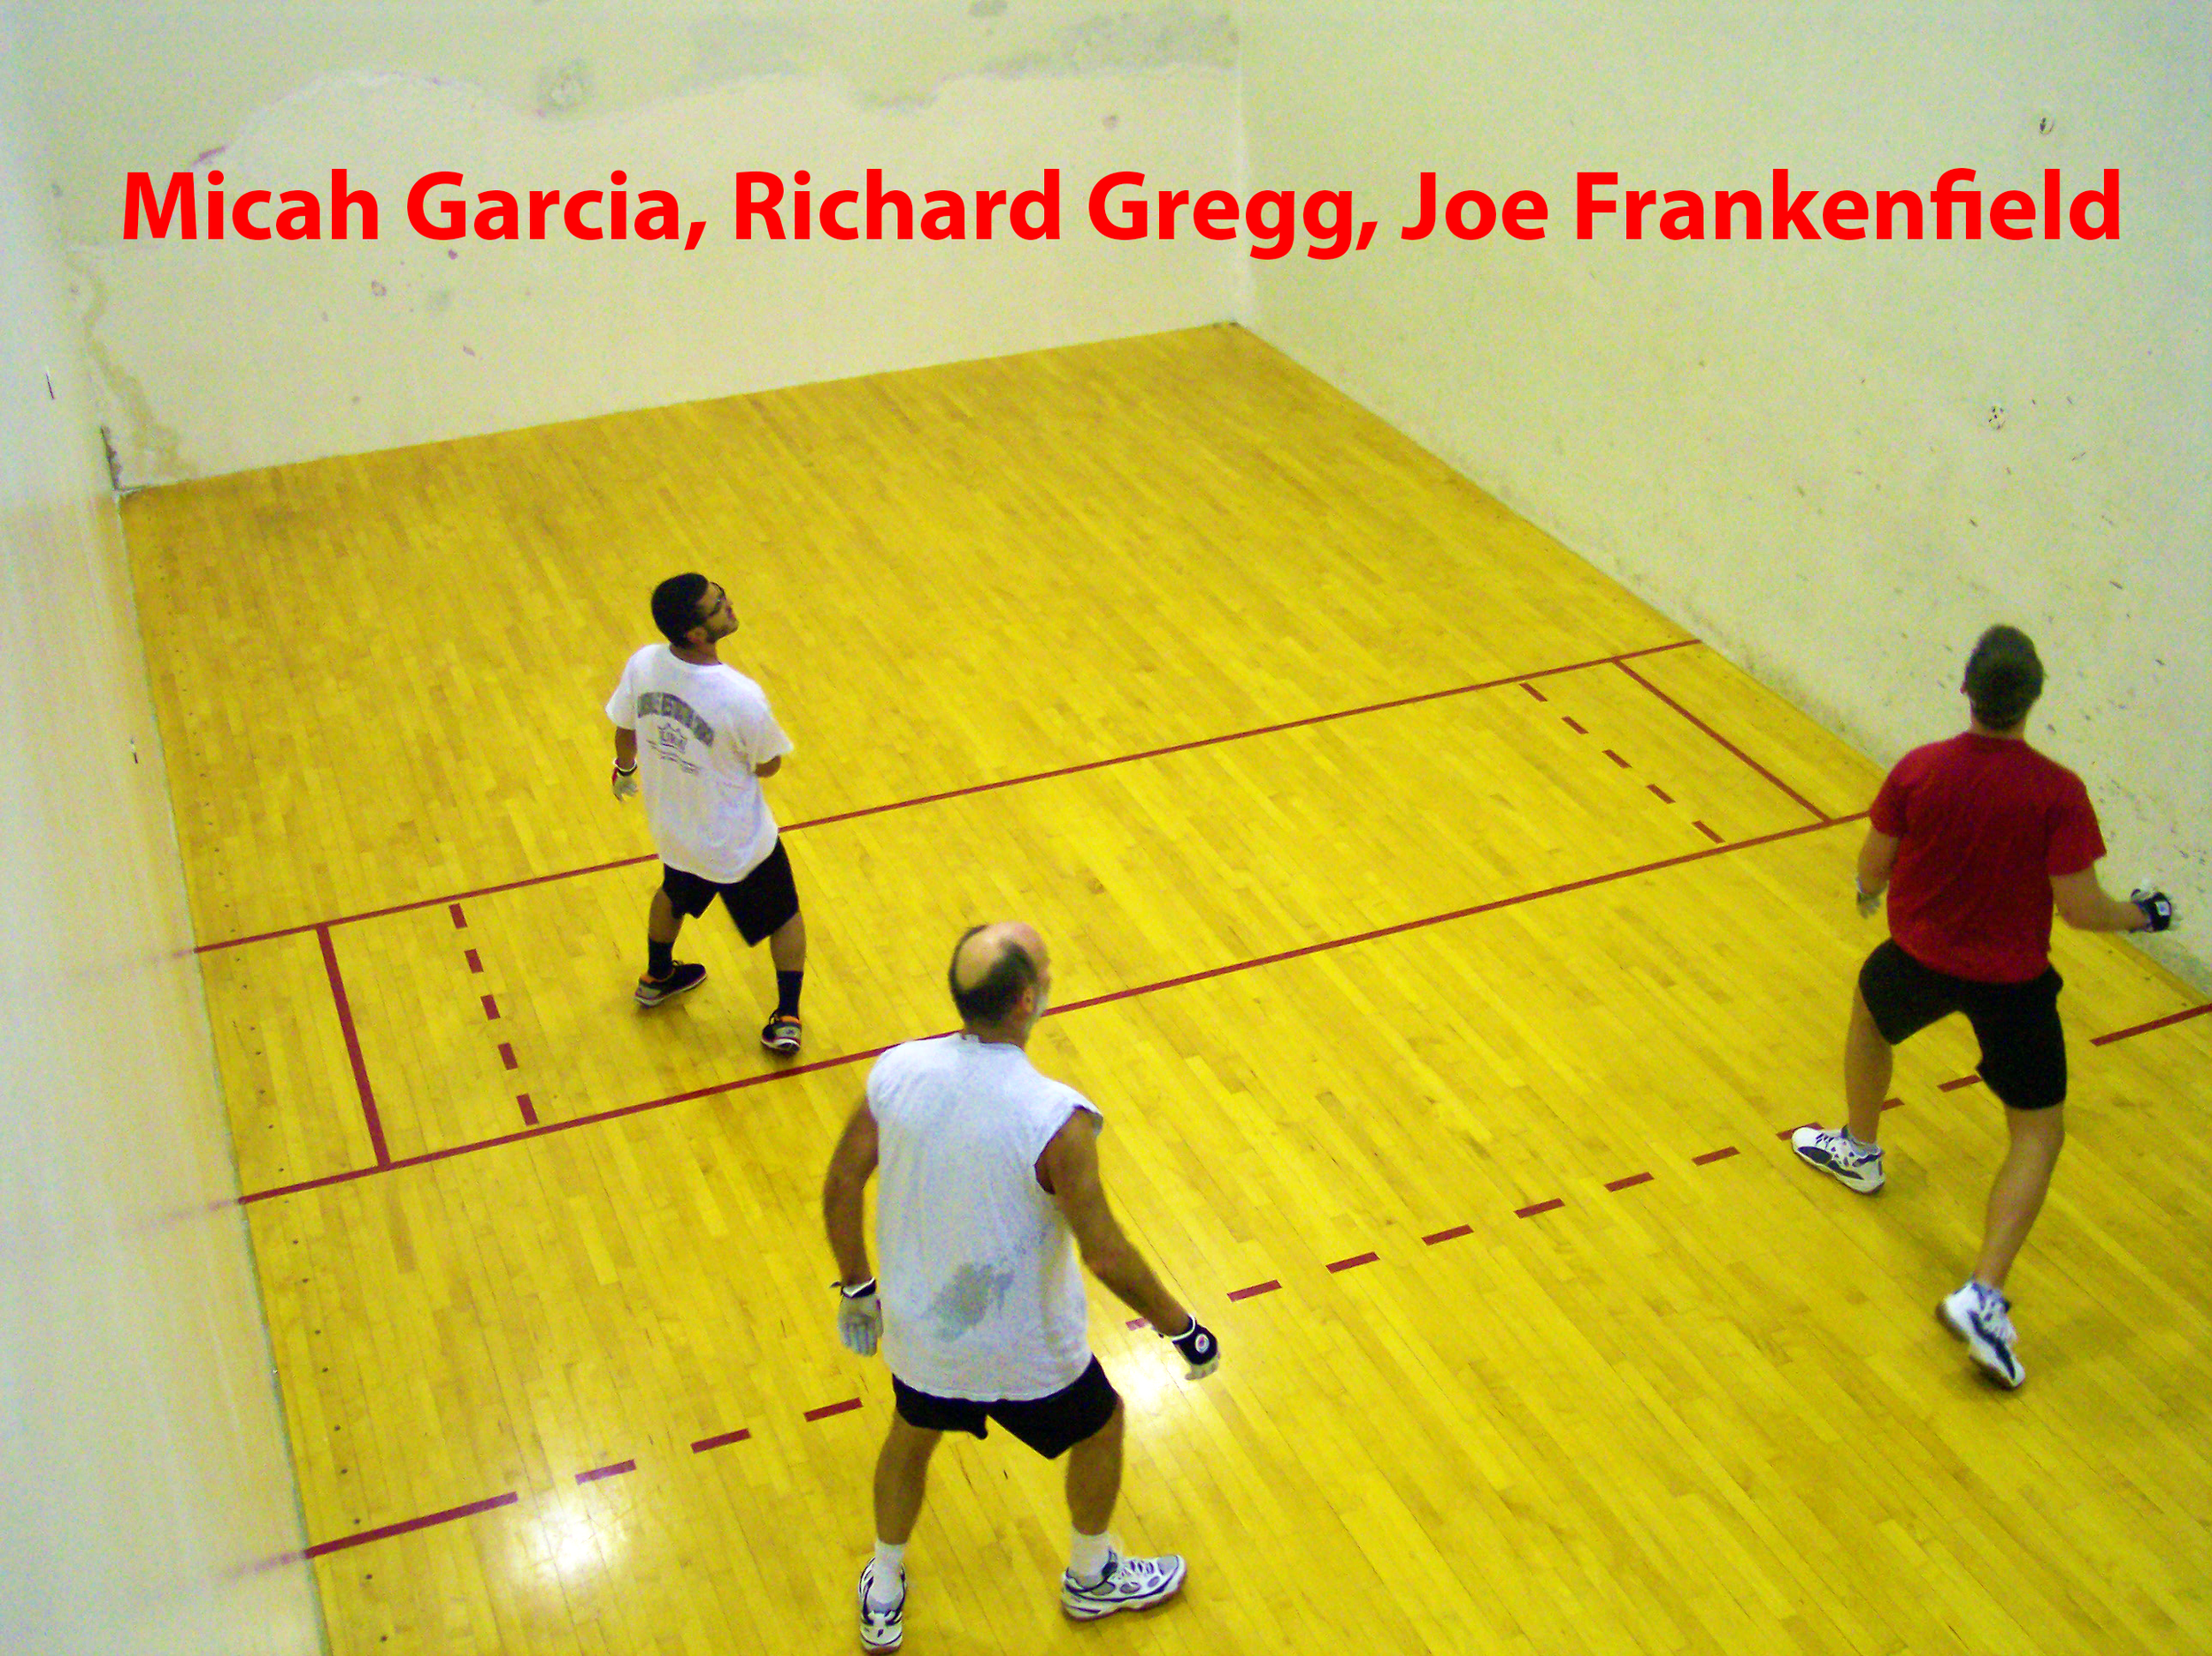 Micah Garcia, Richard Gregg, Joe Frankenfield.png